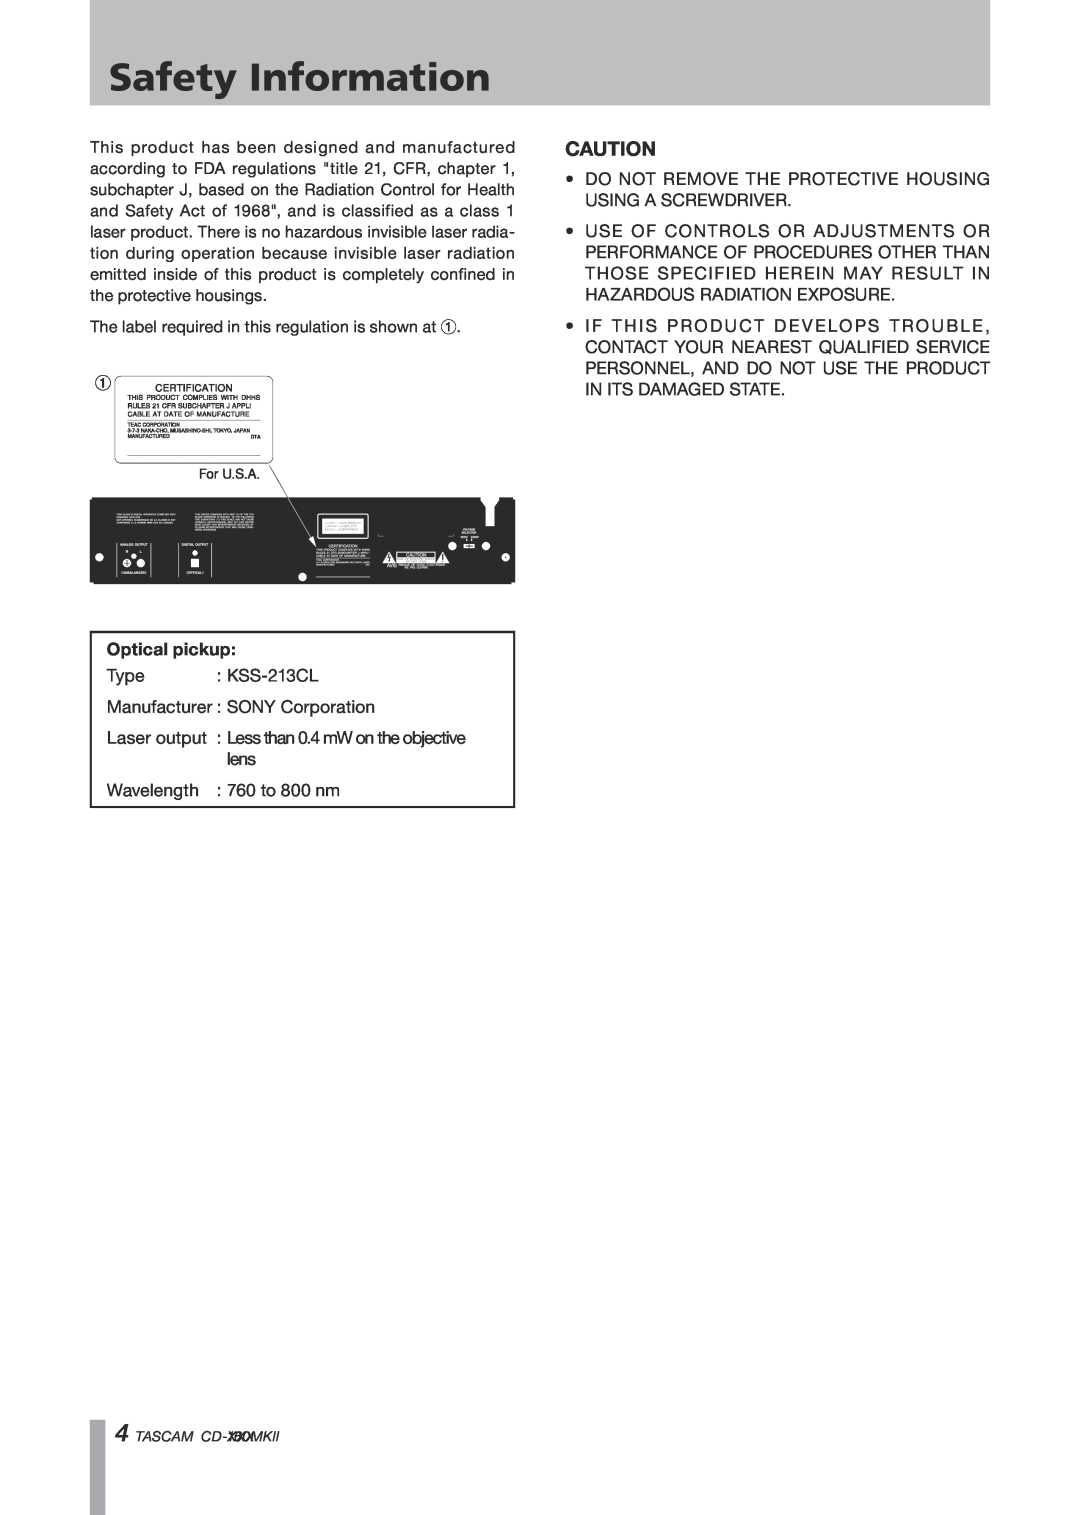 Tascam CD-160MKII owner manual Safety Information, Optical pickup 